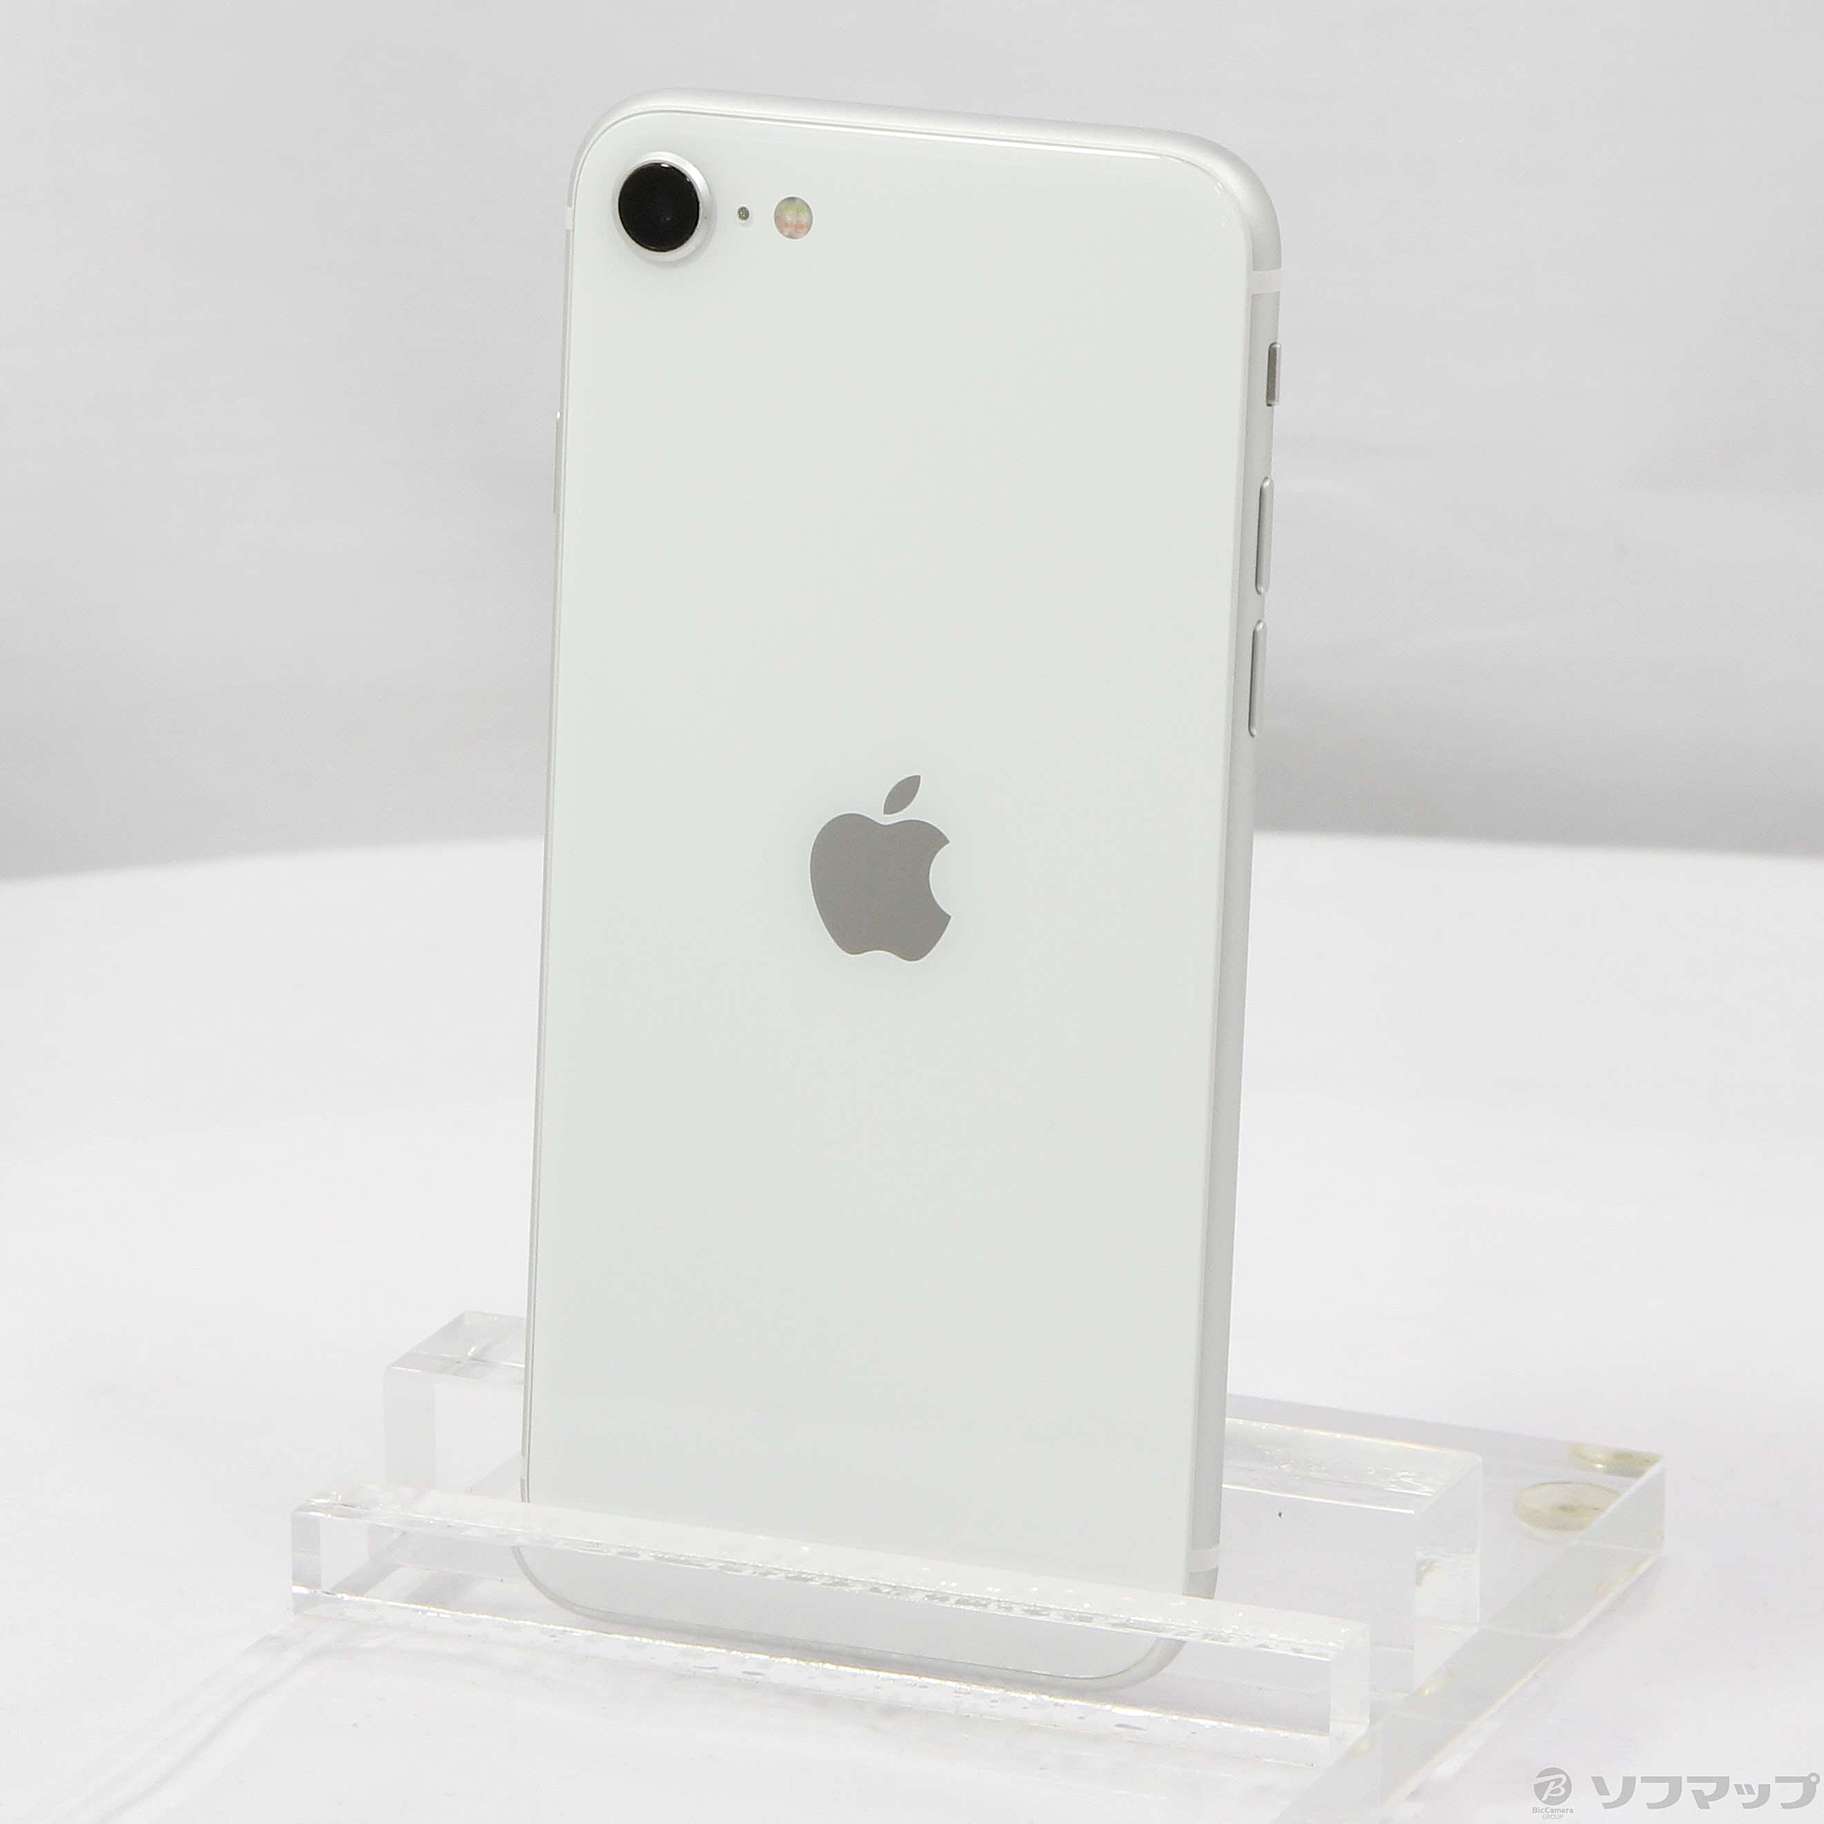 iPhone SE (第2世代) 64GB SIMフリー [ホワイト] 中古(白ロム)価格比較 ...